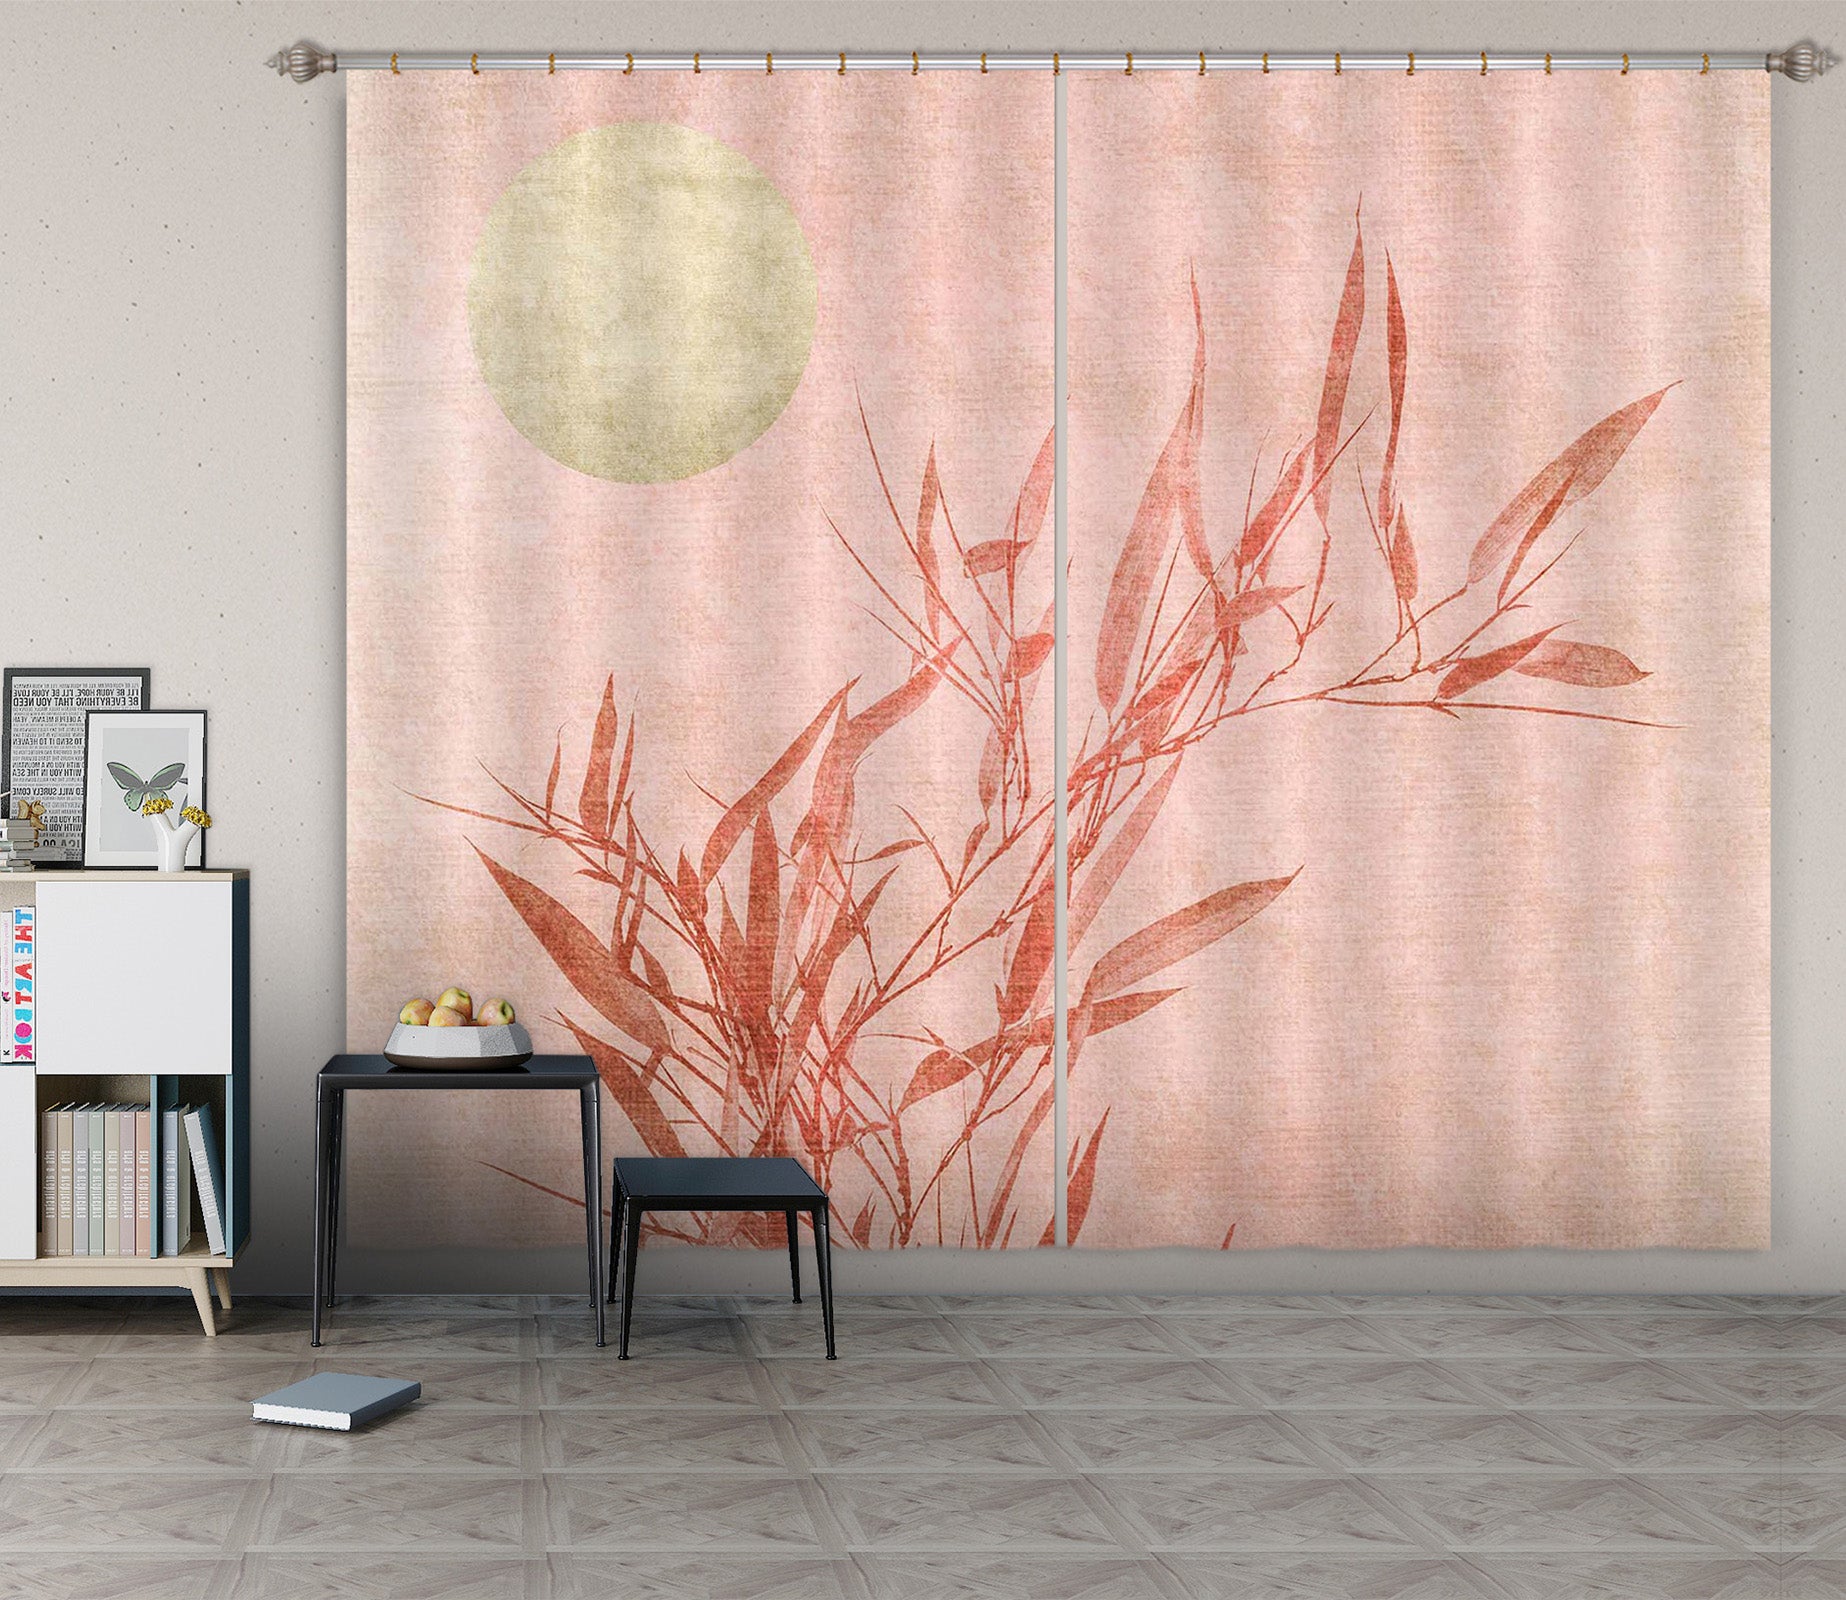 3D Sentimental Touch 050 Boris Draschoff Curtain Curtains Drapes